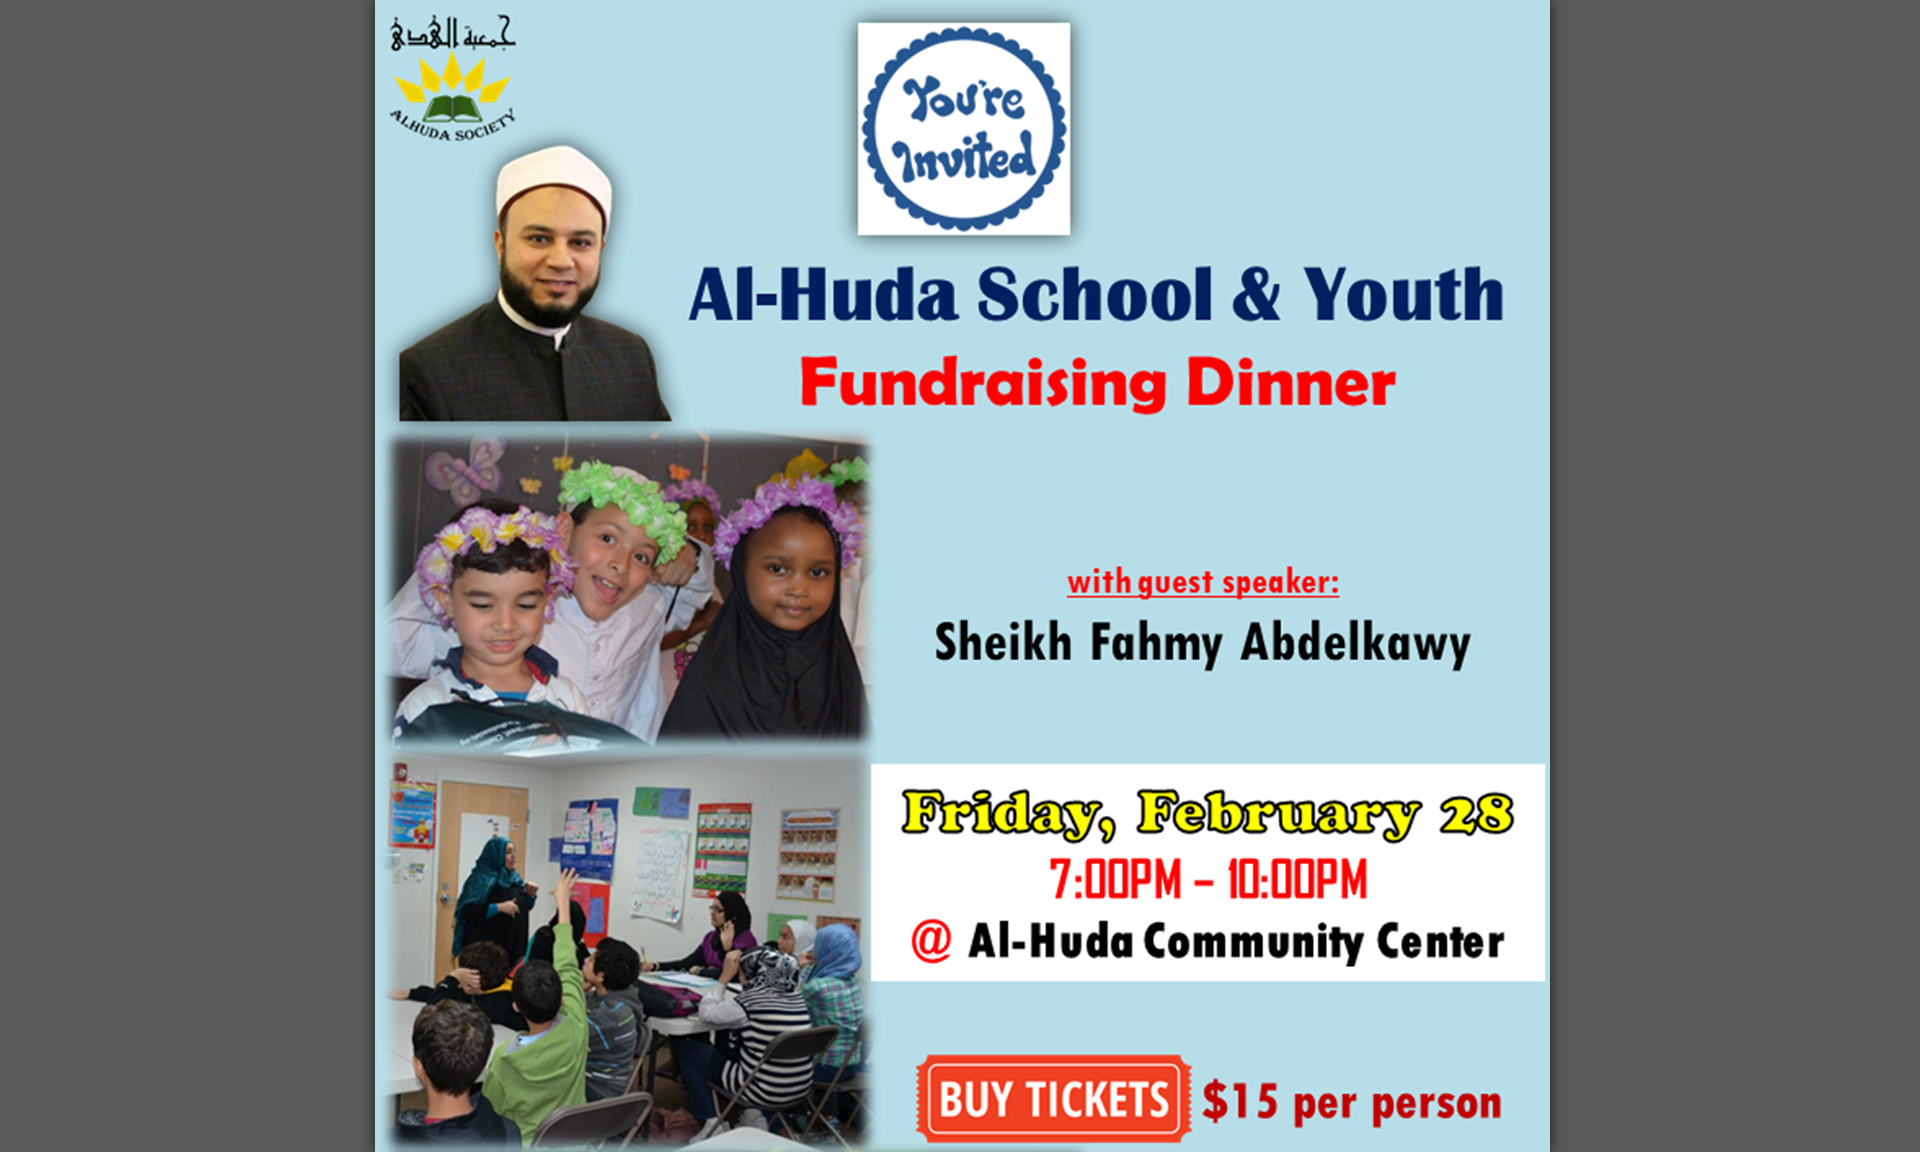 Al-Huda School & Youth Fundraising